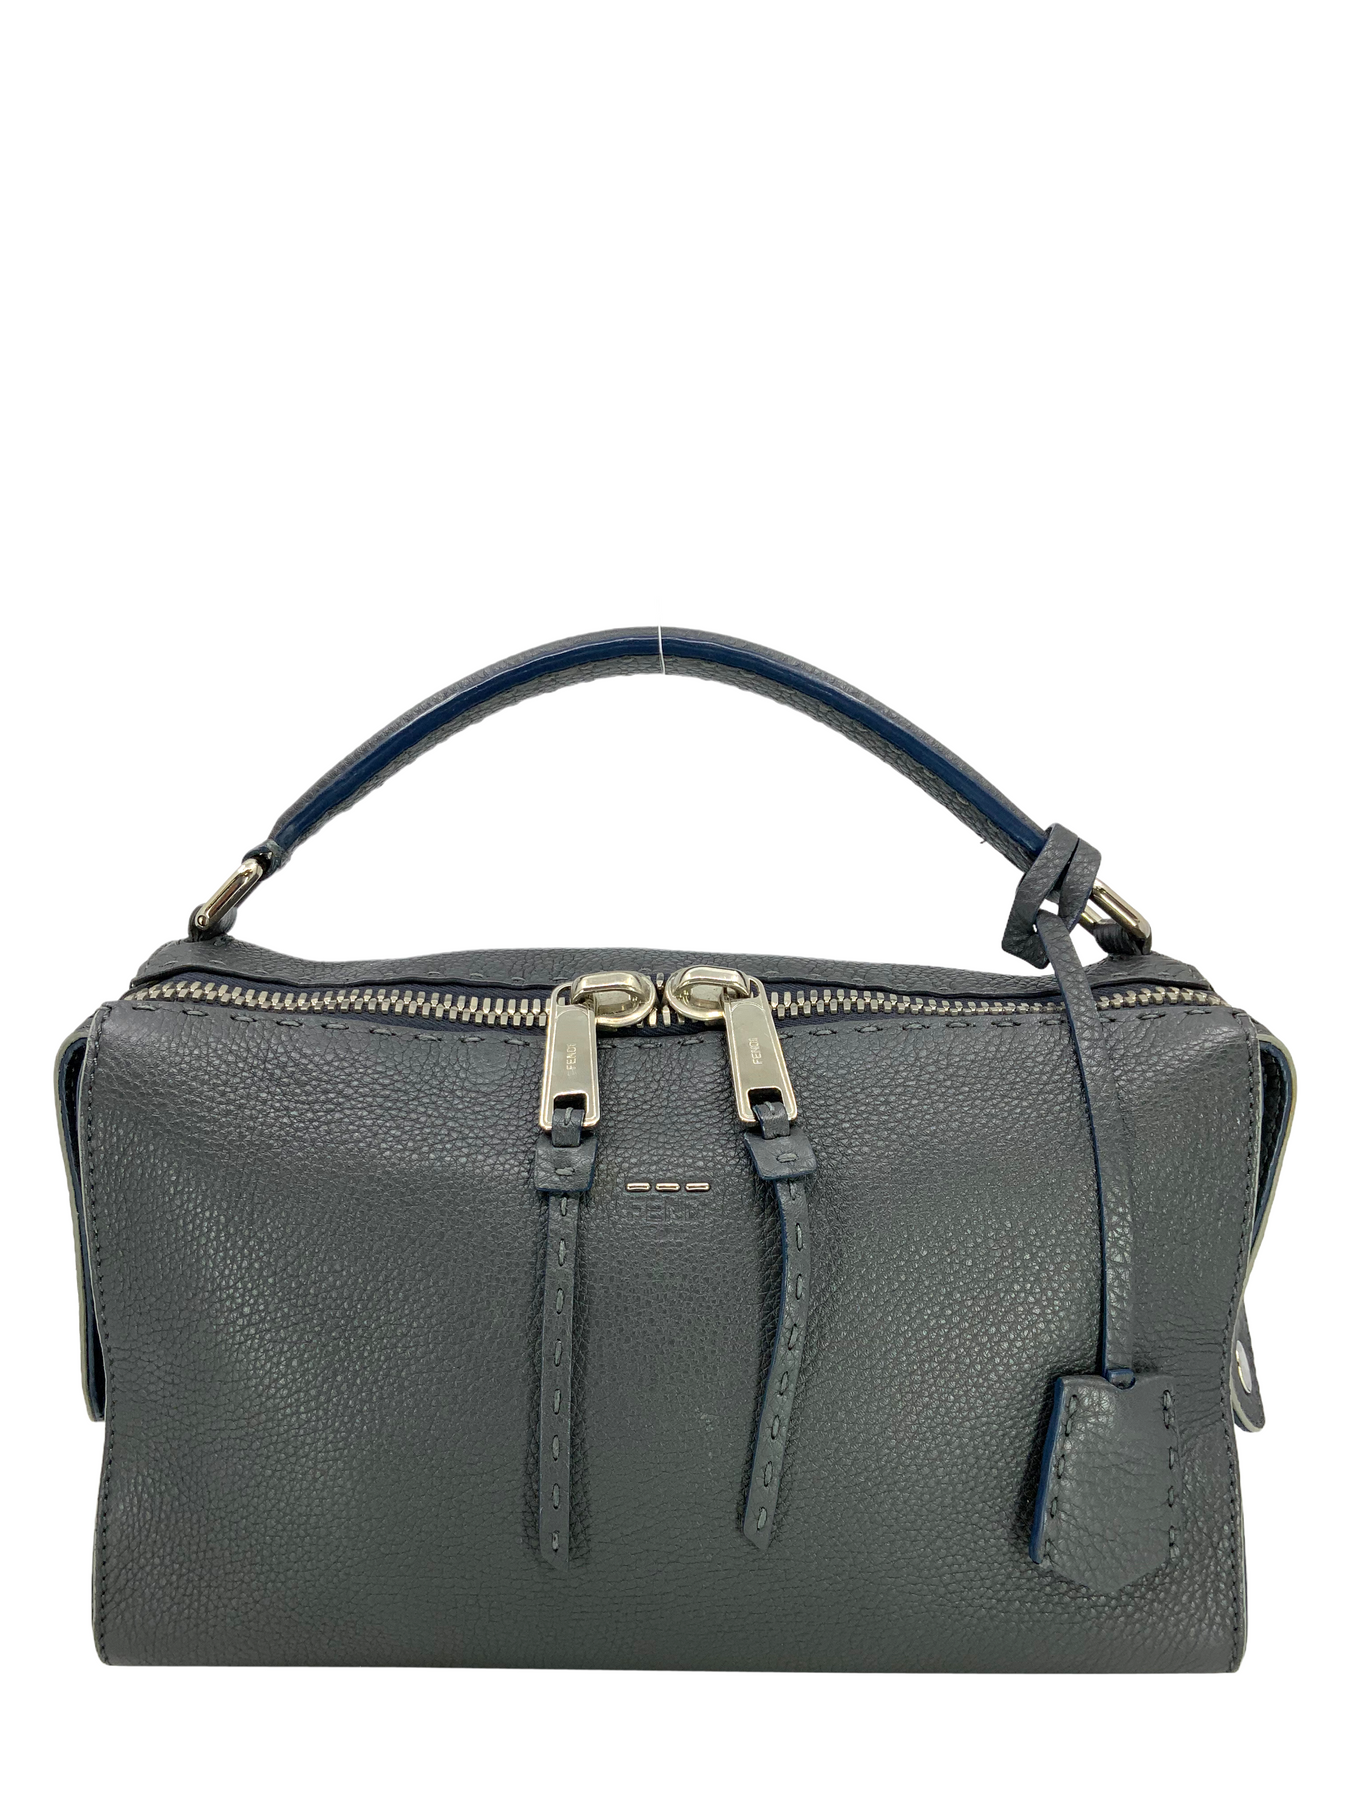 gatear Para exponer Fragua FENDI Lei Selleria Leather Boston Bag - Consigned Designs